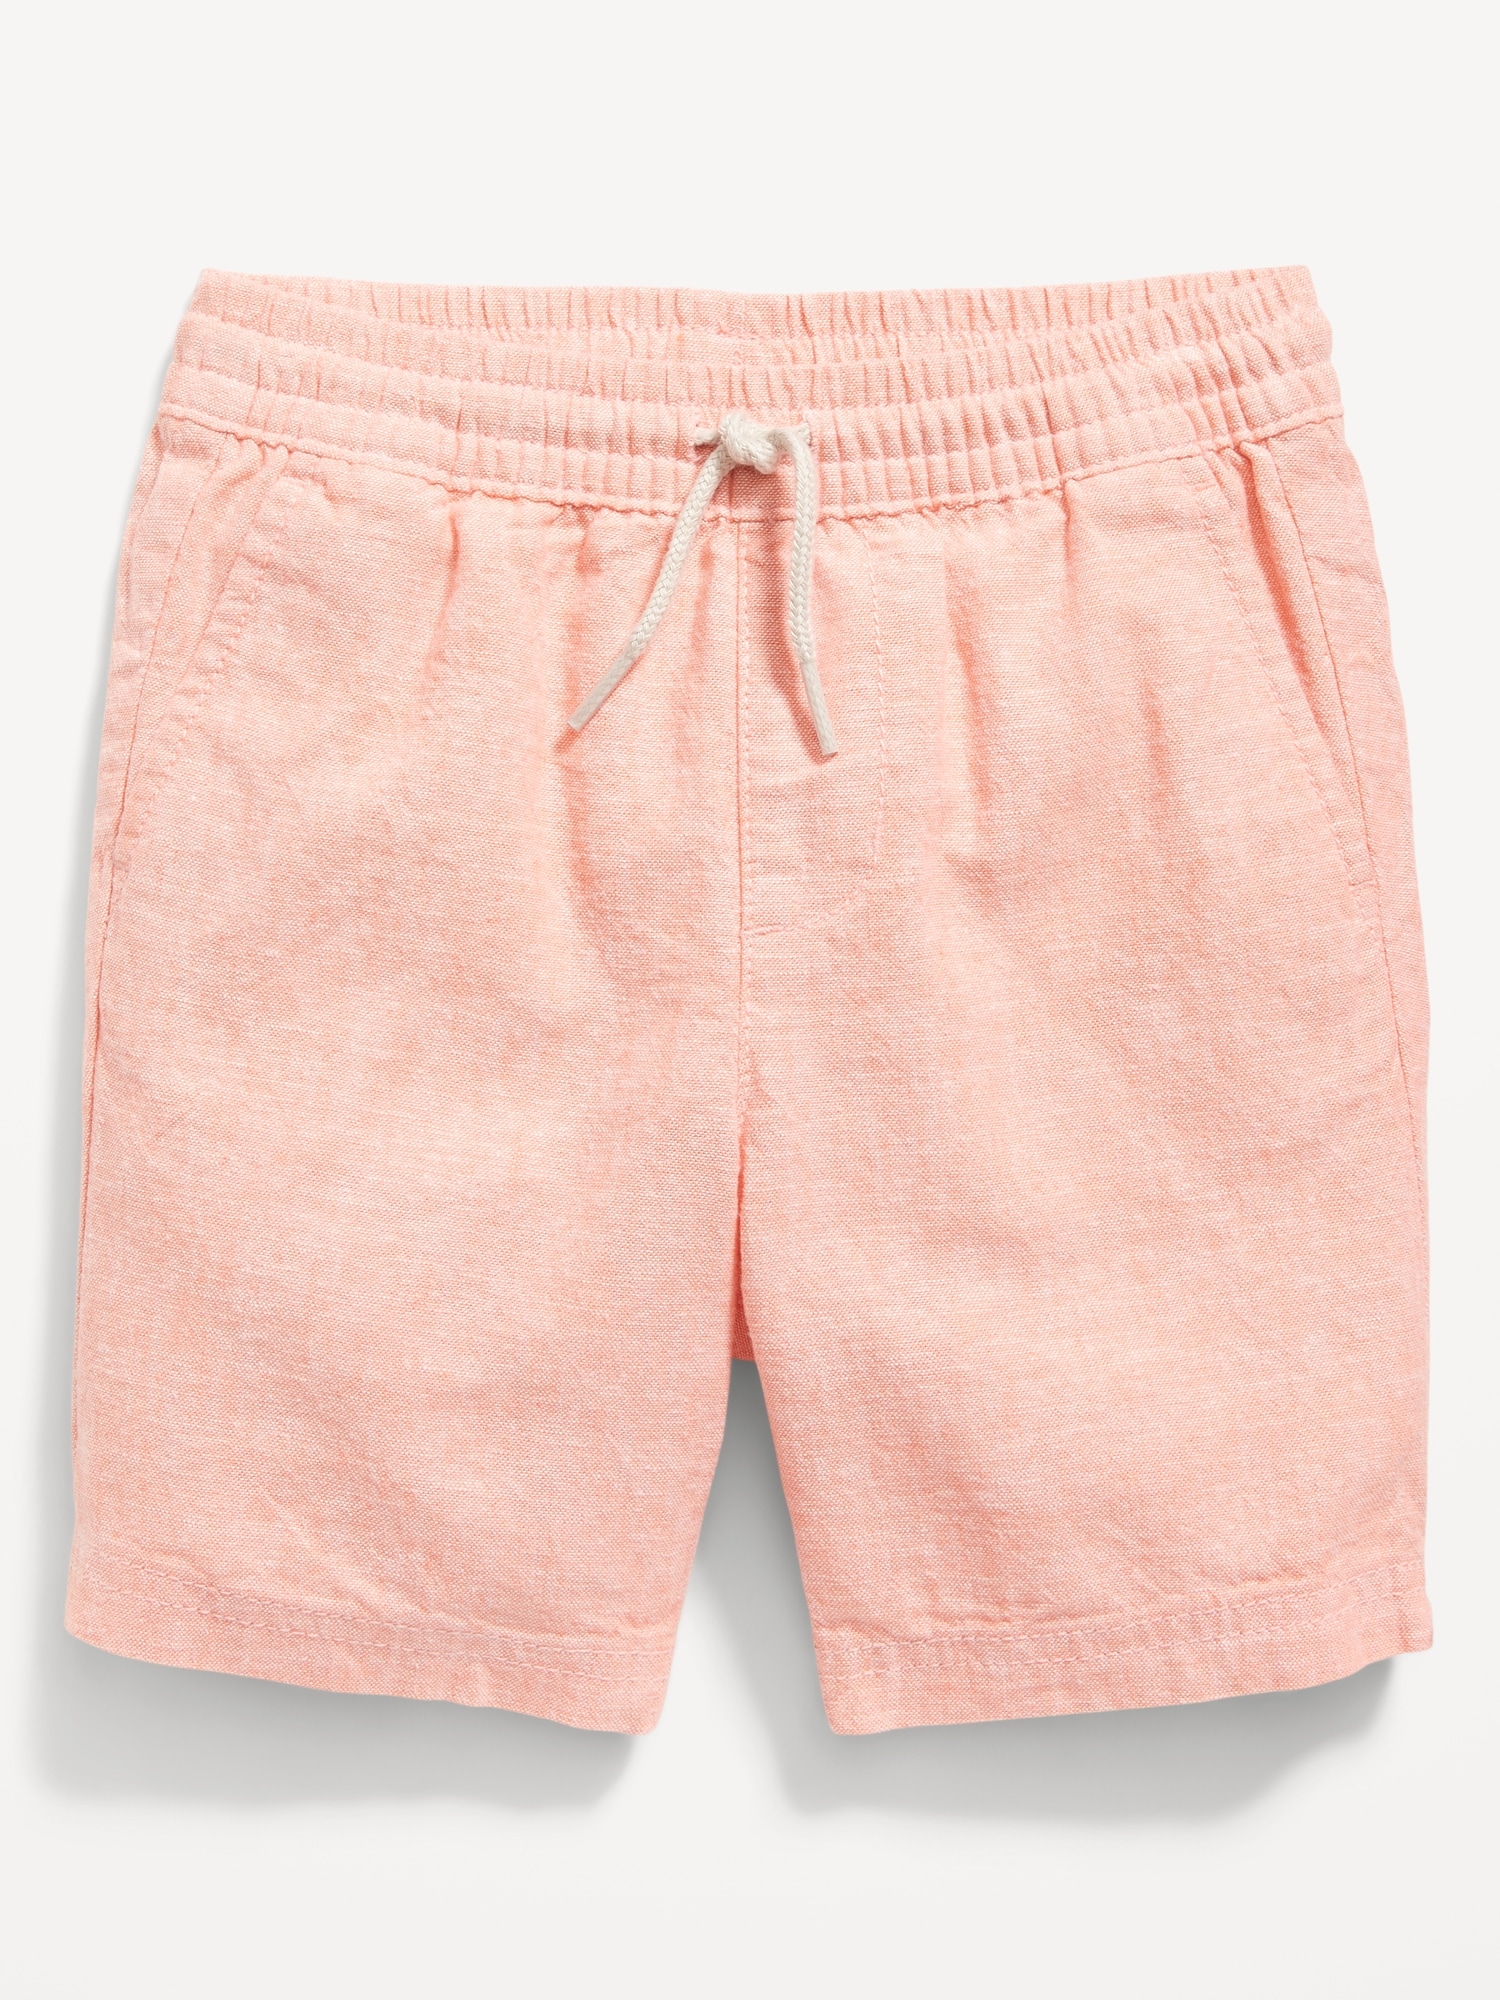 Functional-Drawstring Linen-Blend Shorts for Toddler Boys Hot Deal